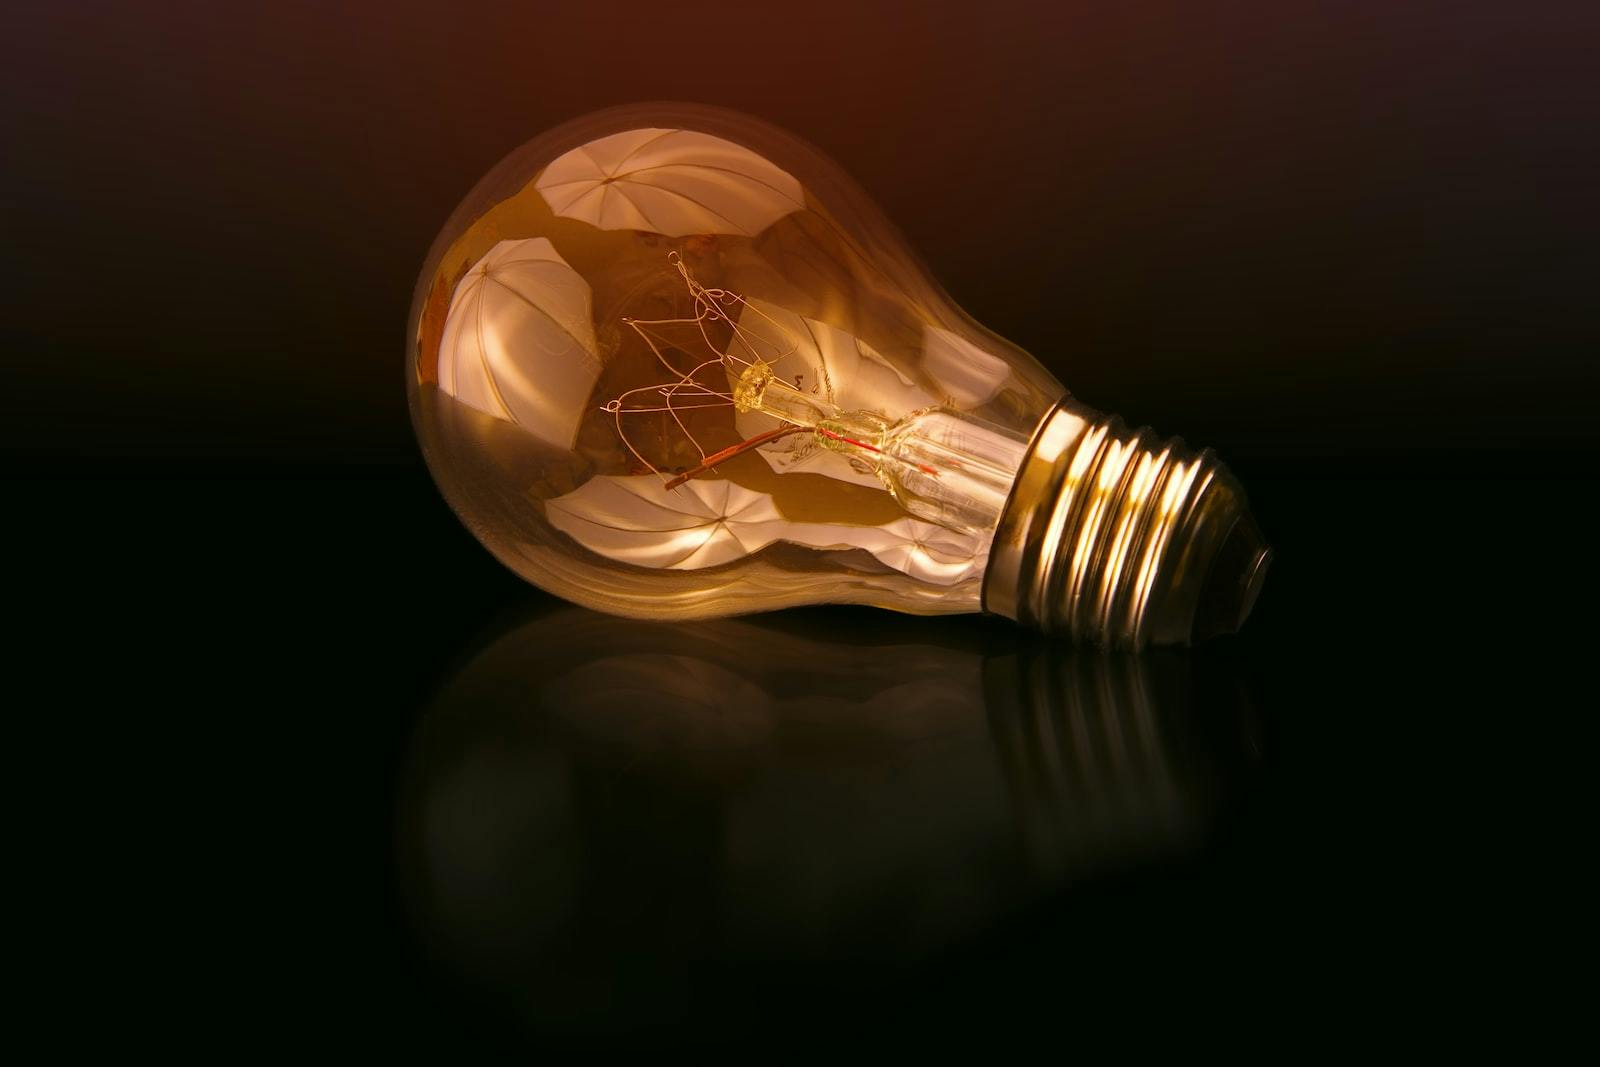 Light bulb on a dark background